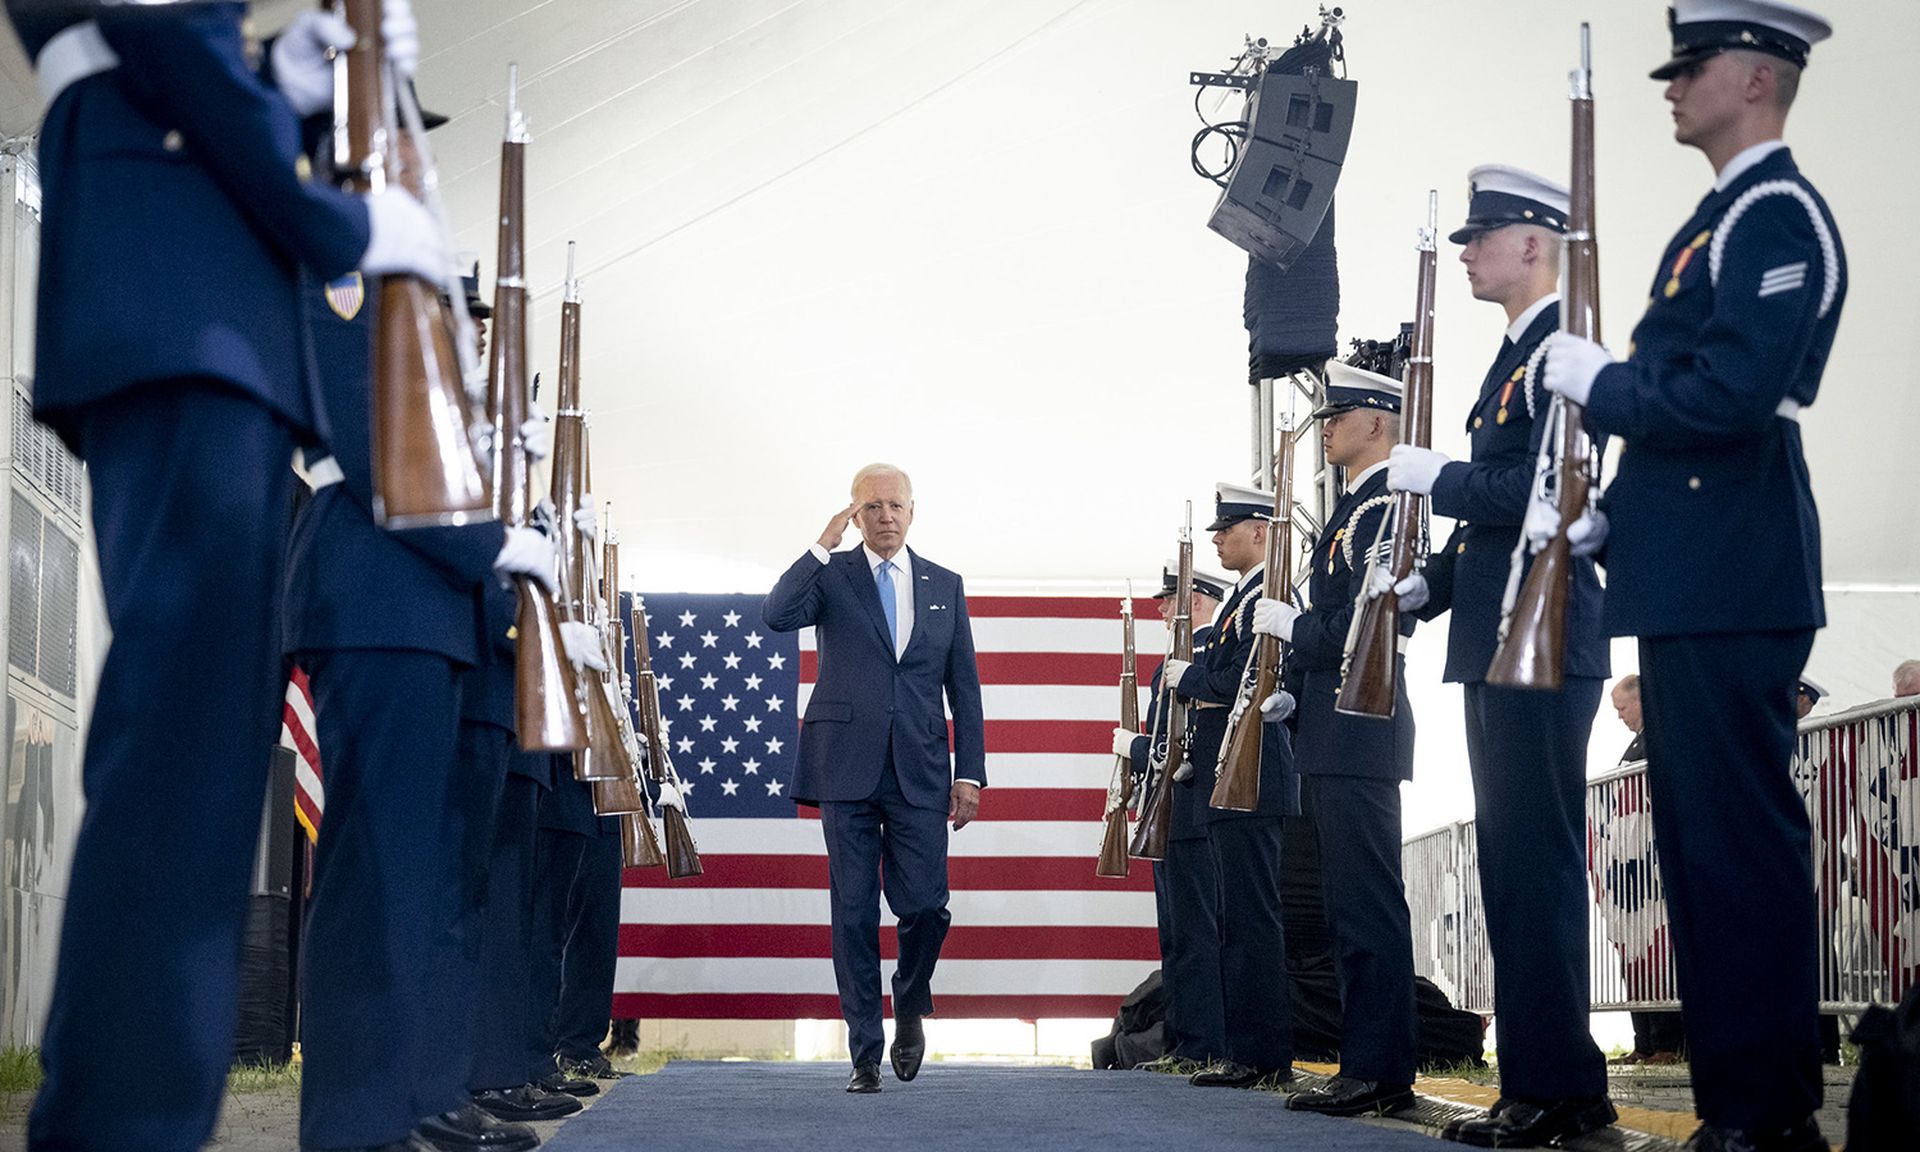 Pictured: President Joe Biden salutes during a U.S. Coast Guard change-of-command ceremony in Washington. (Benjamin Applebaum/DHS)